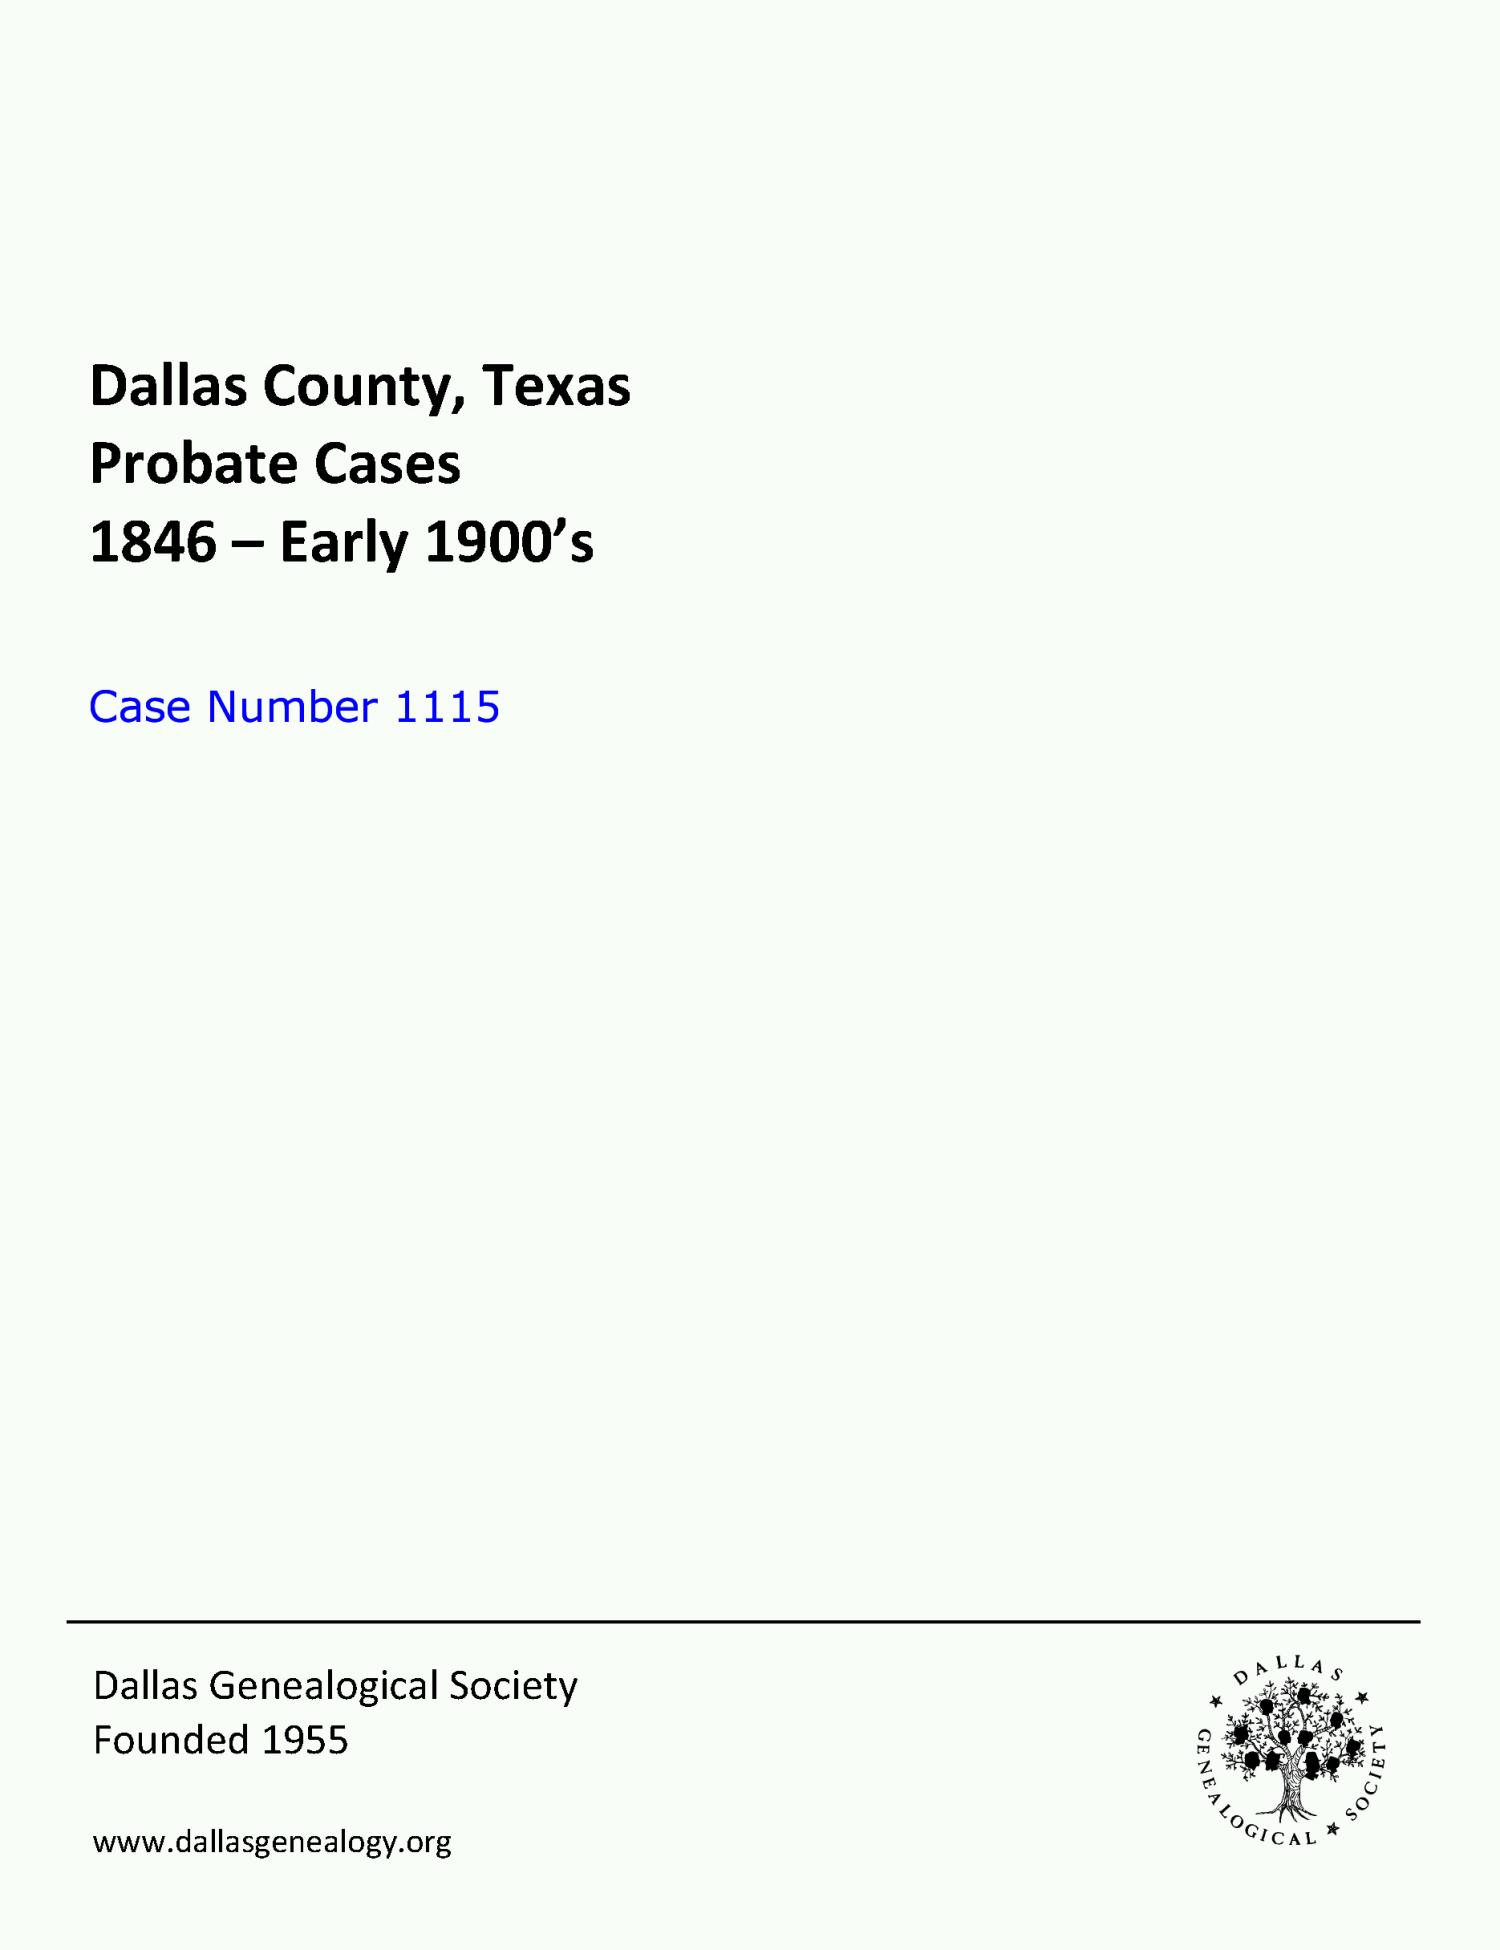 Dallas County Probate Case 1115: Hanlin, Jacob (Deceased)
                                                
                                                    [Sequence #]: 1 of 8
                                                